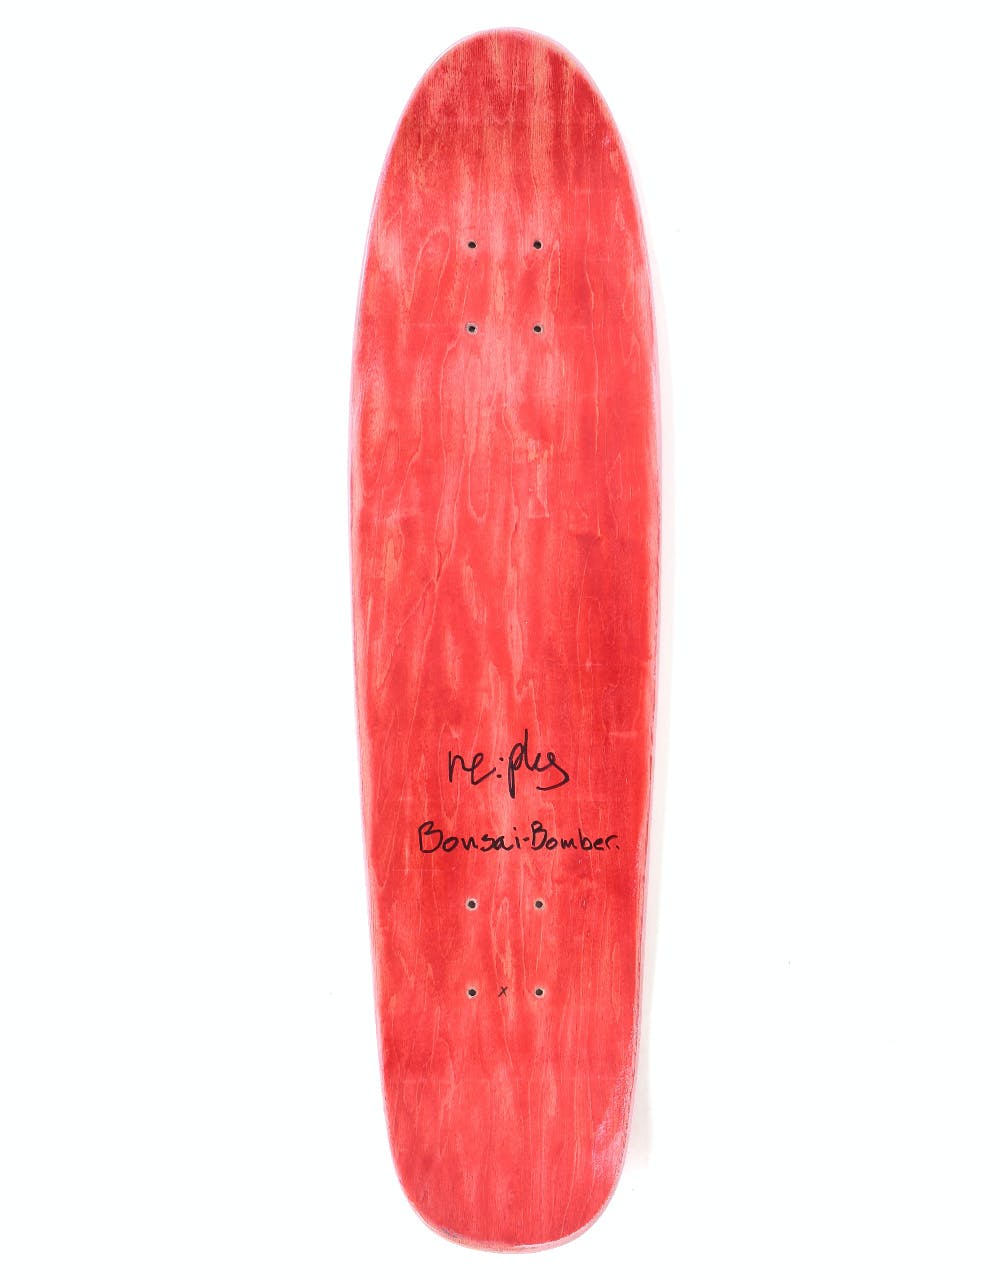 re:ply Bonsai Bomber Pinkstick Skateboard Deck - 7.5"